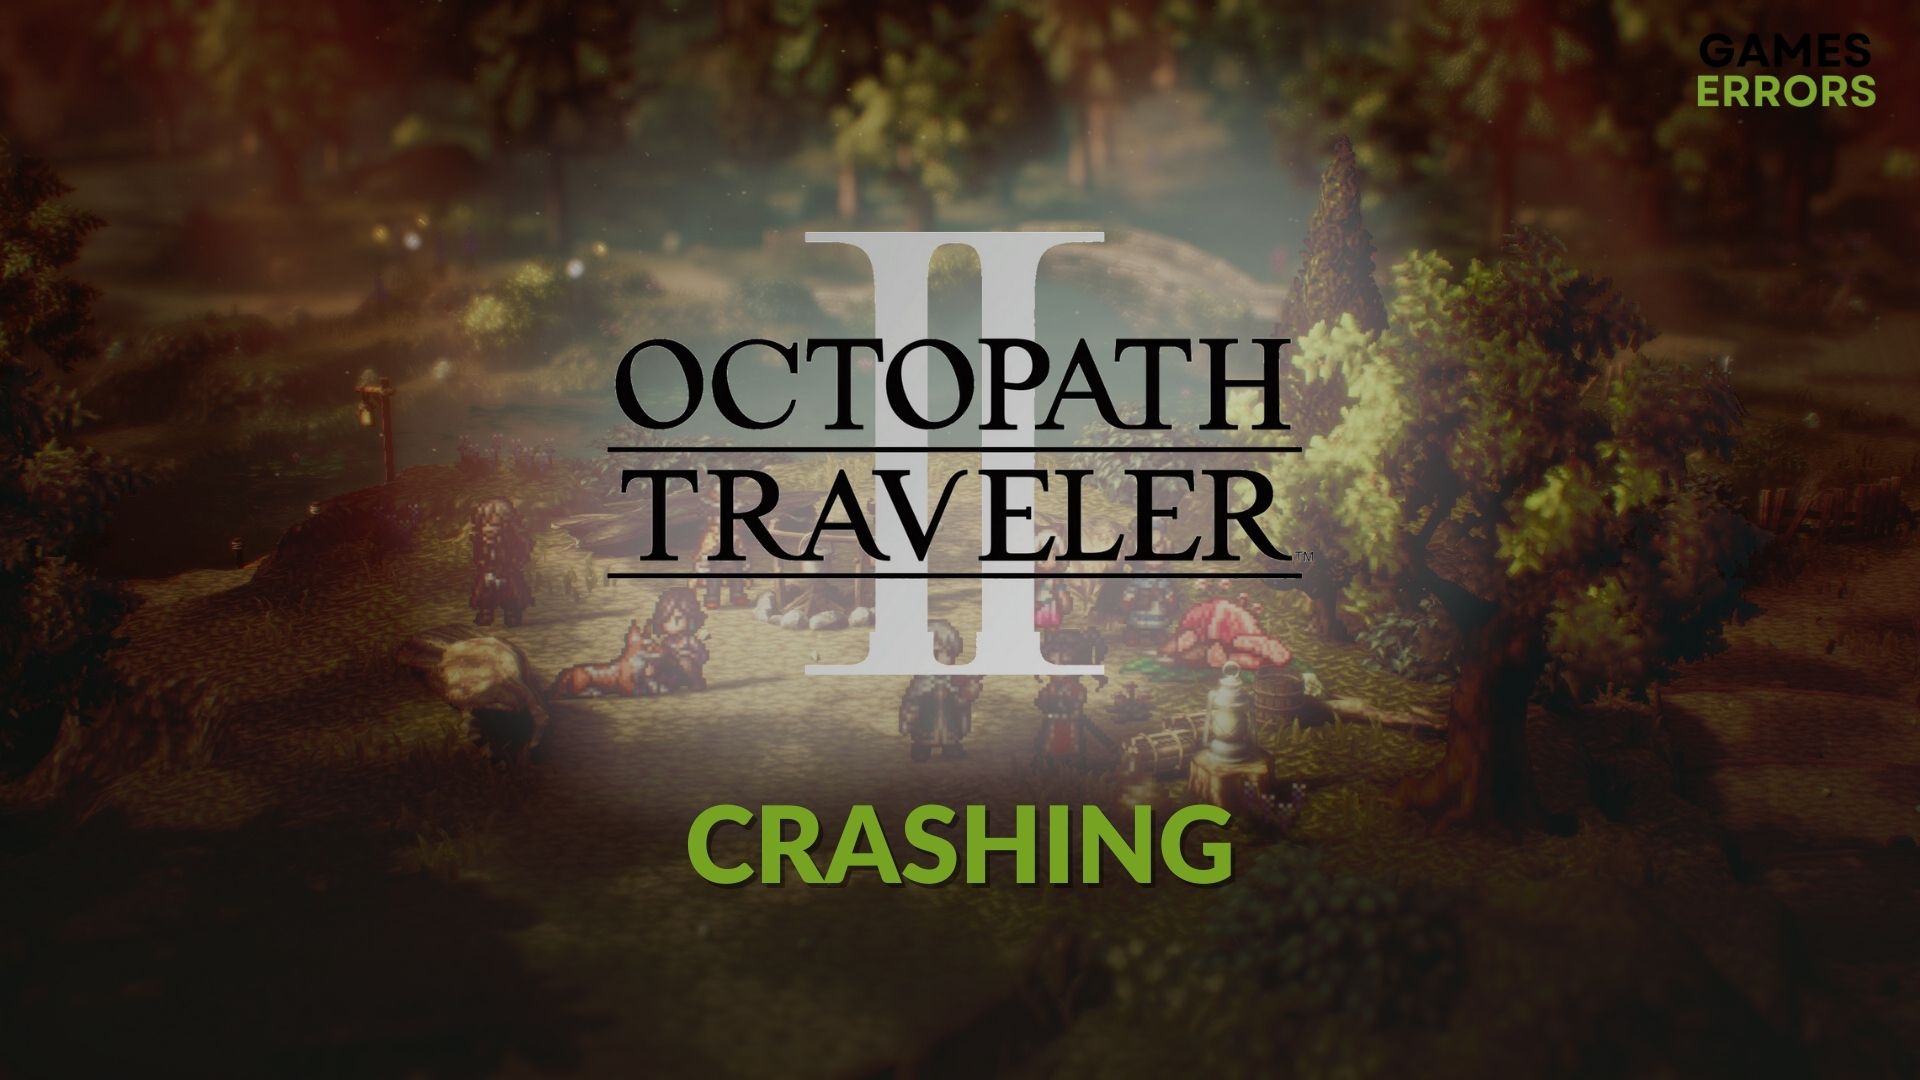 How to fix octopath traveler 2 crashing pc